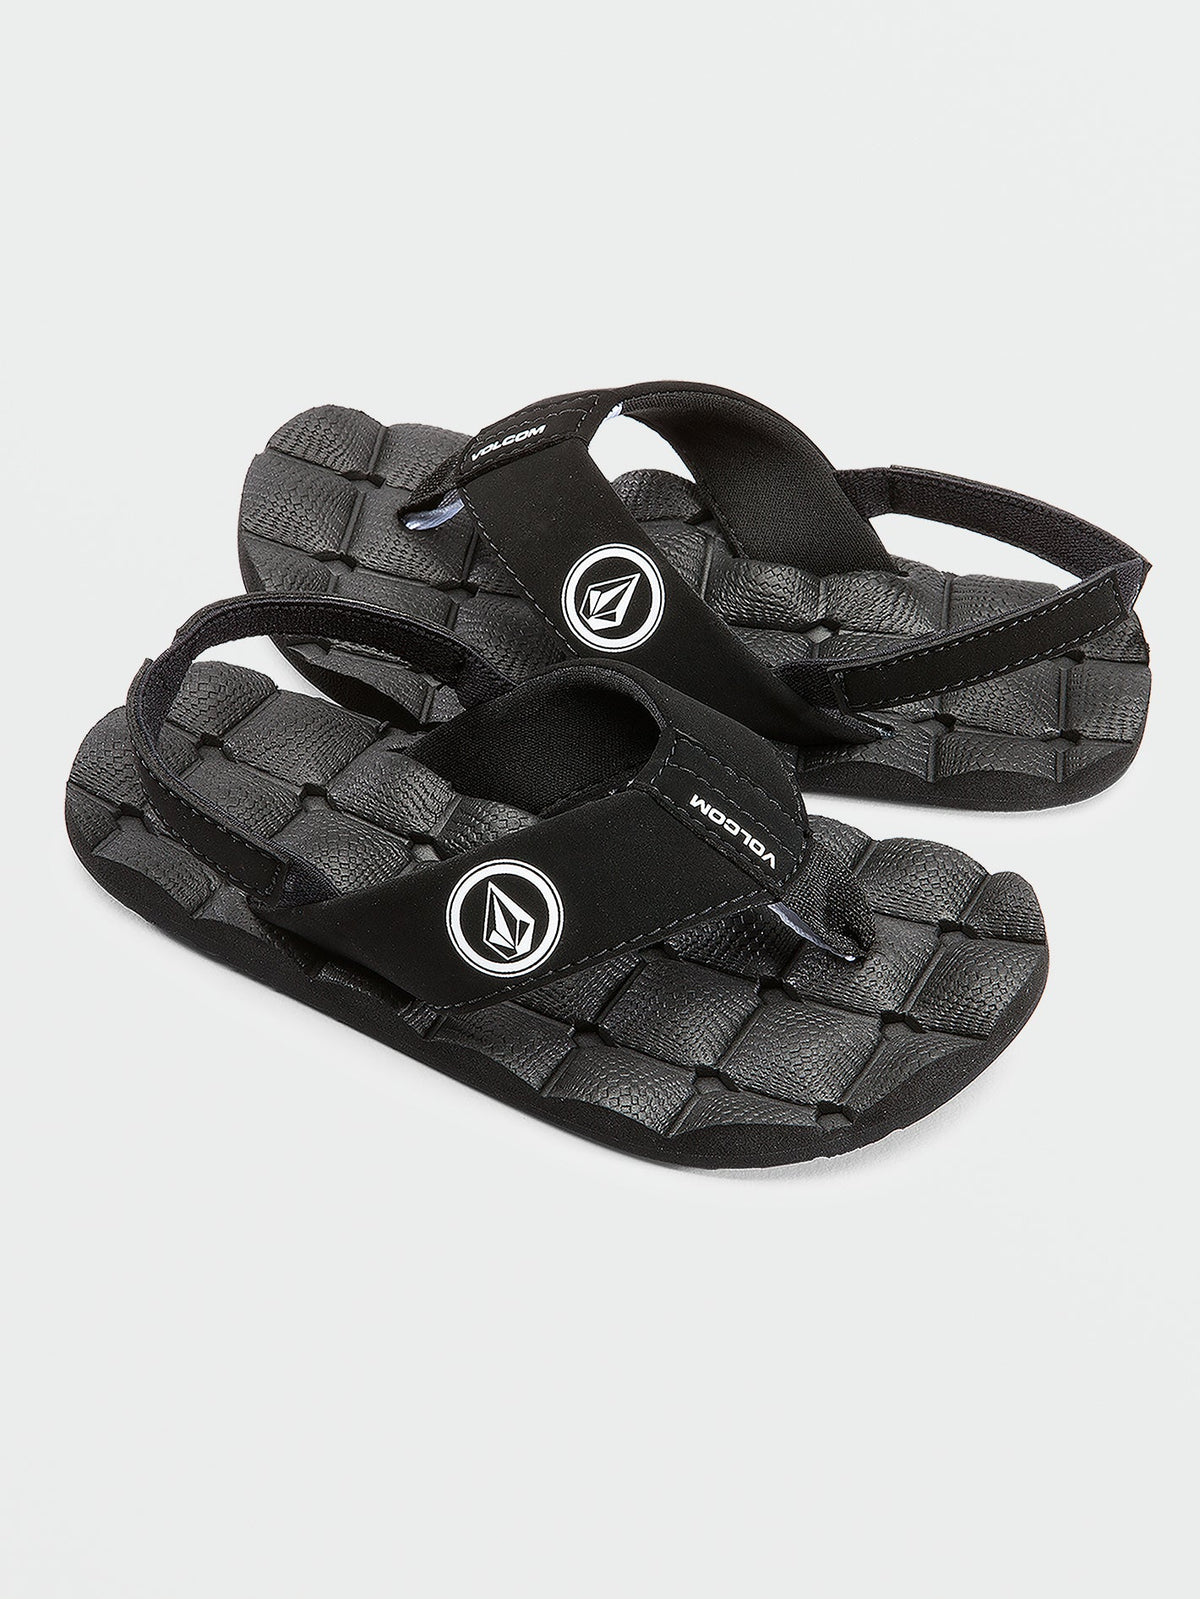 Volcom Recliner Boys Sandals (Age 2-7) Black White